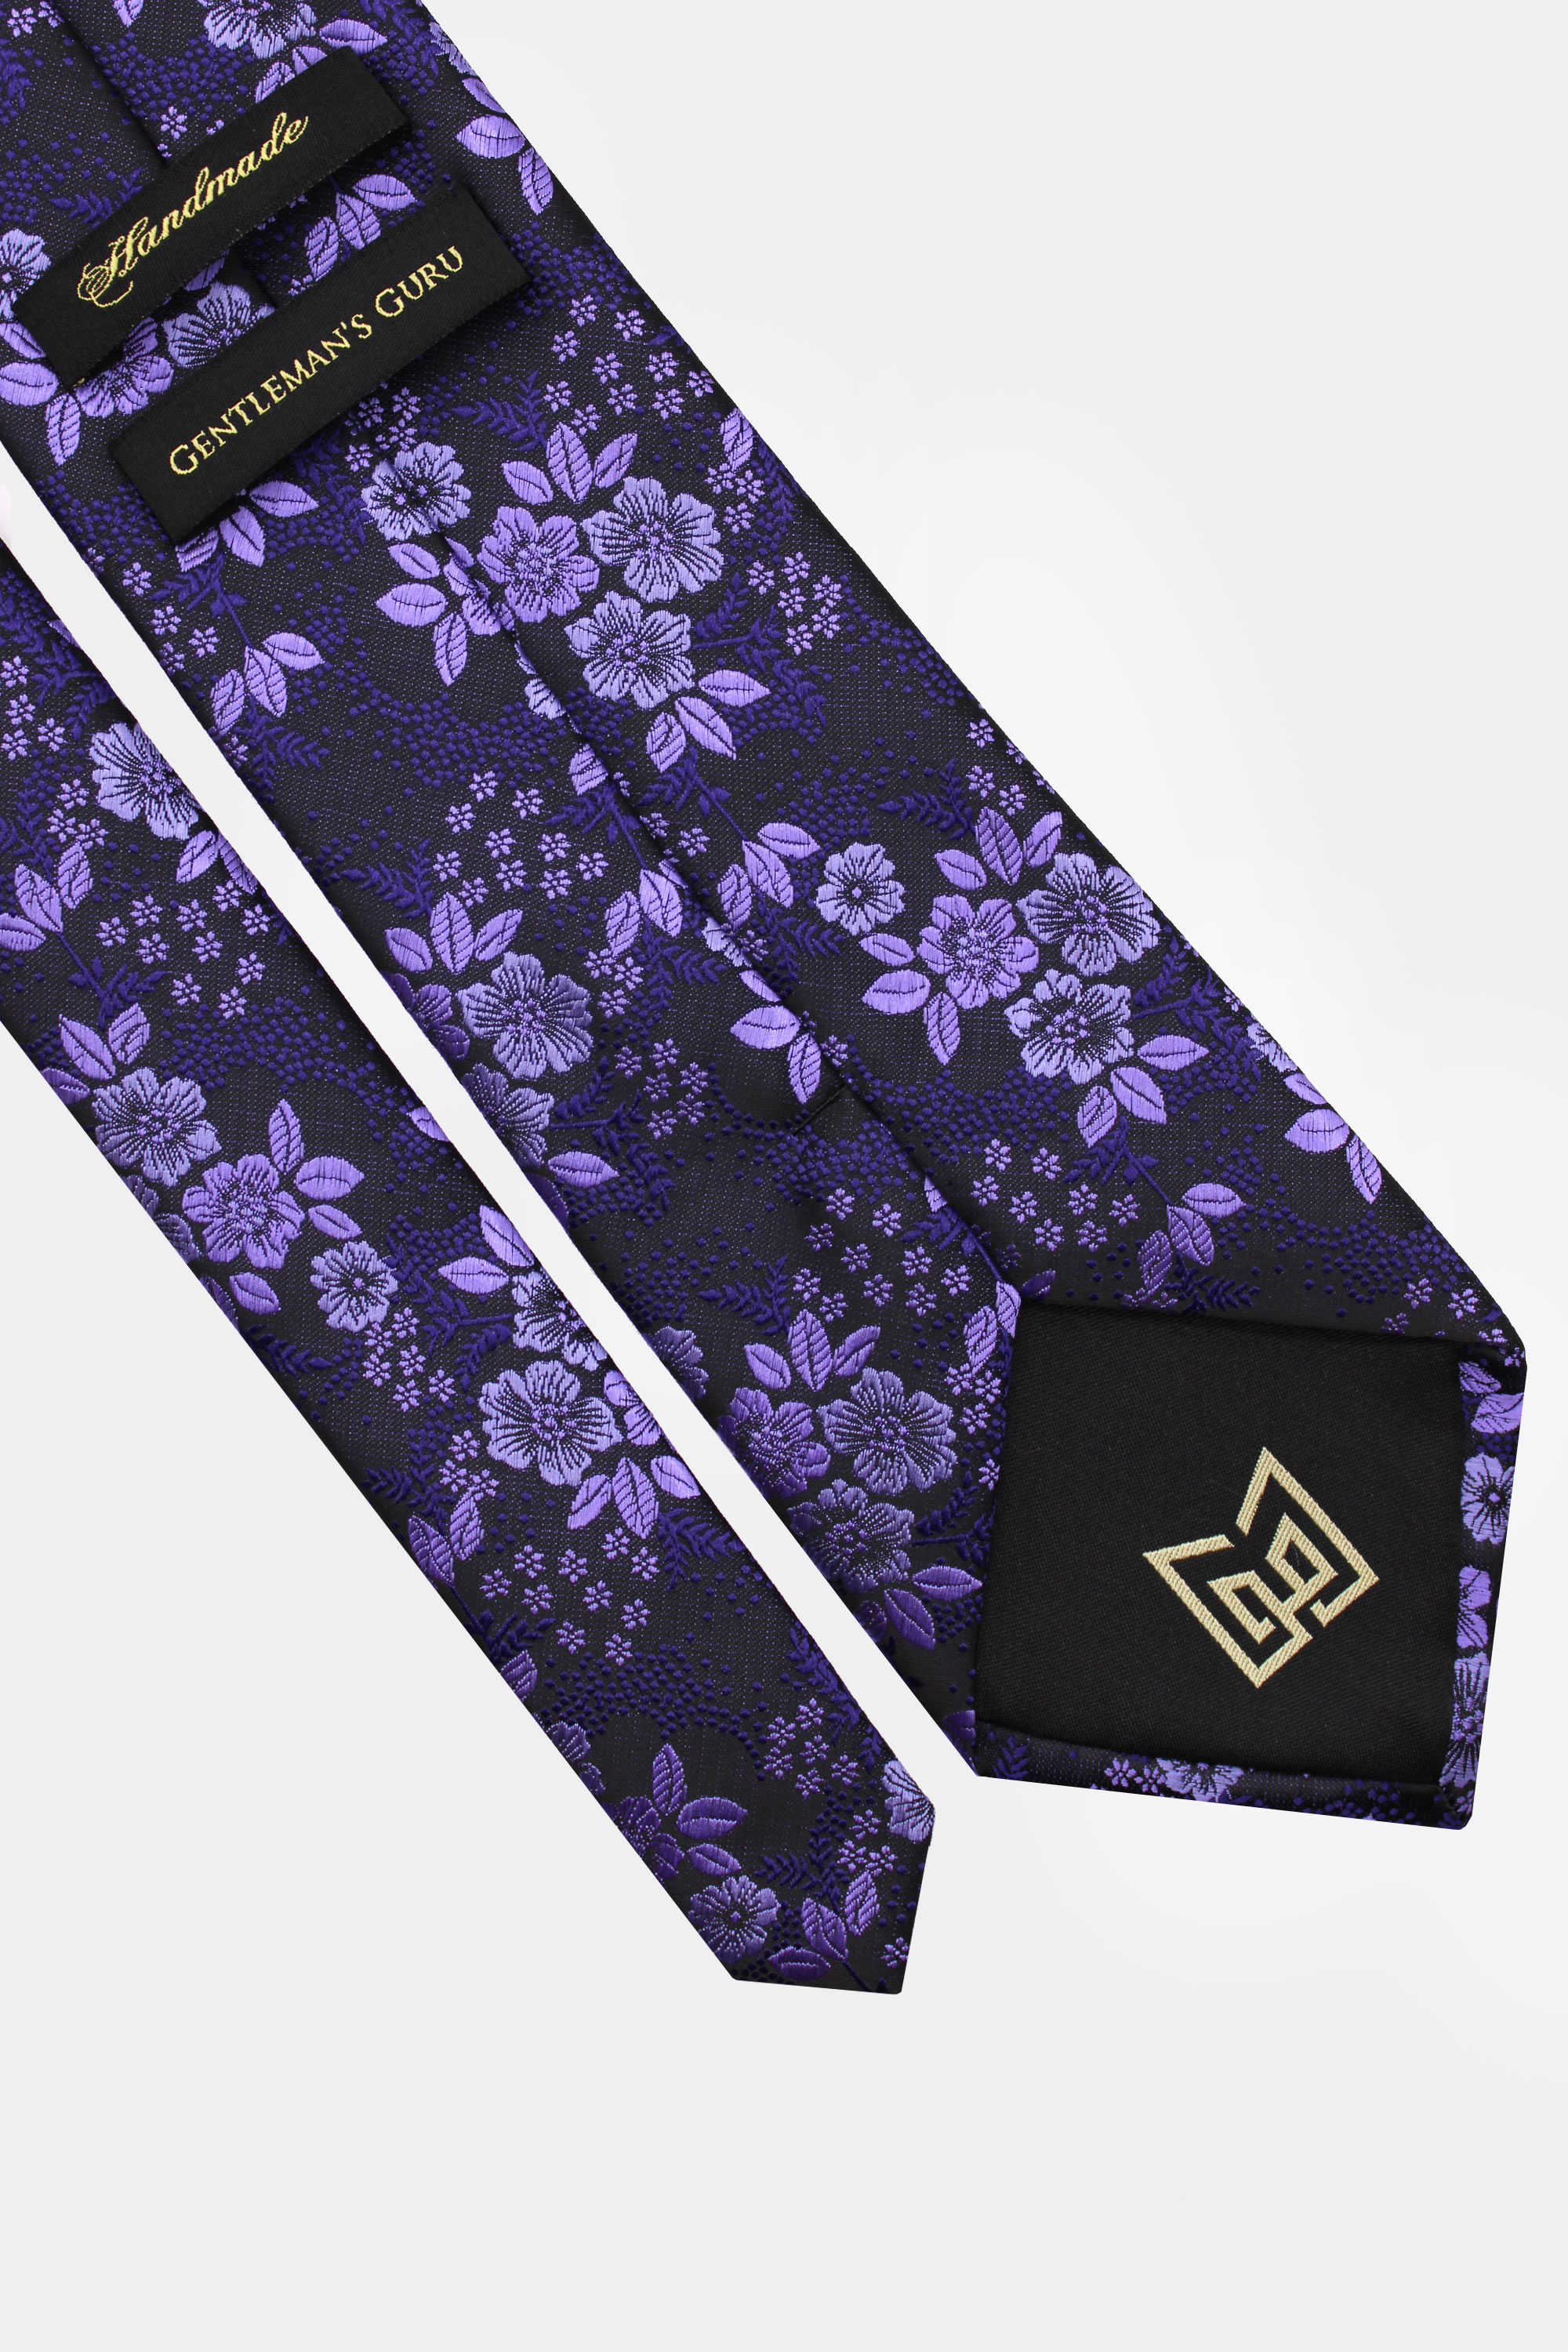 Lavender-Purple-Floral-Tie-from-Gentlemansguru.com